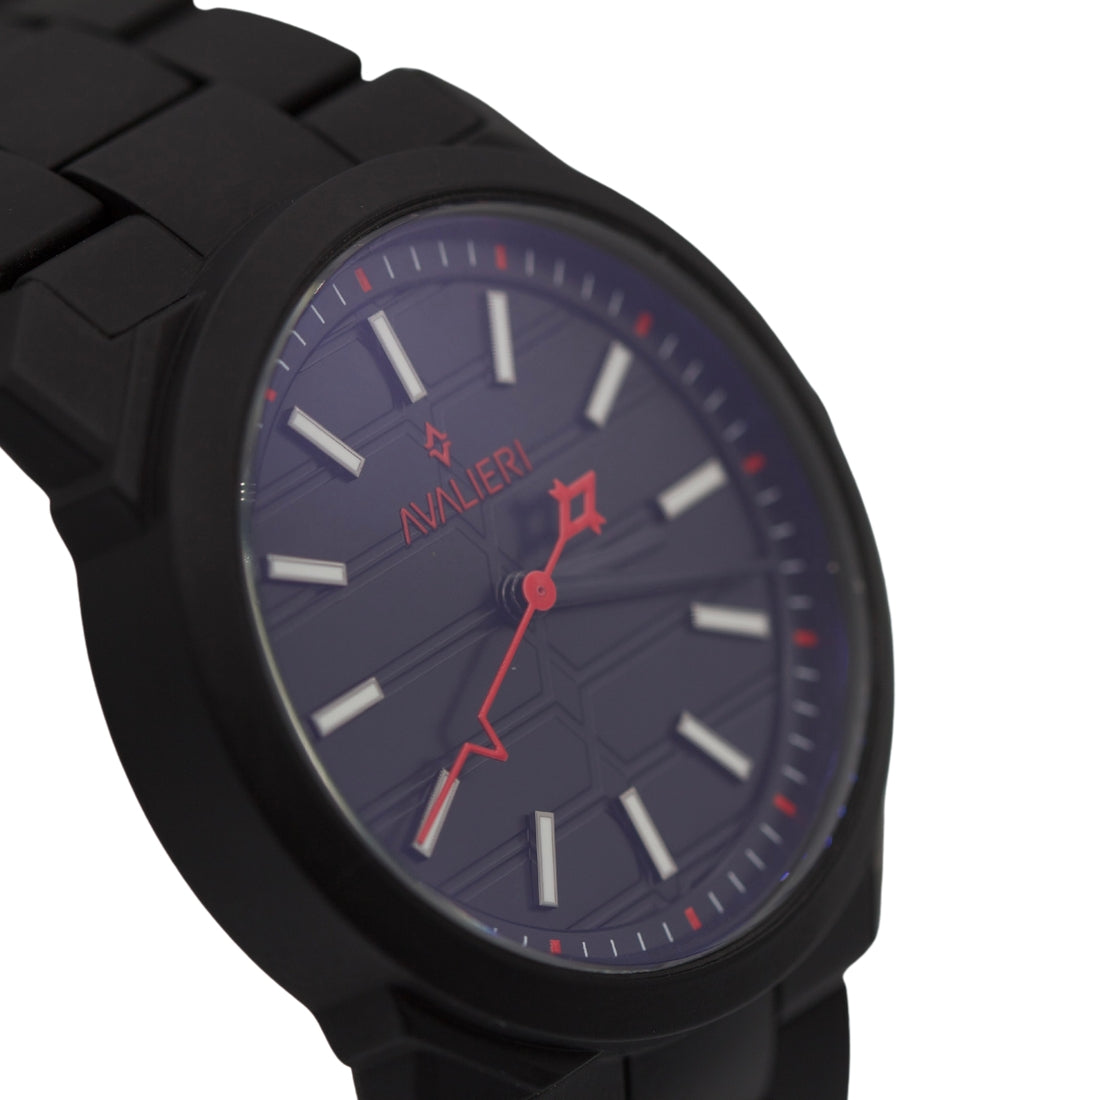 New Avalieri Collection Men's Quartz Watch Black Dial - AV-2575B